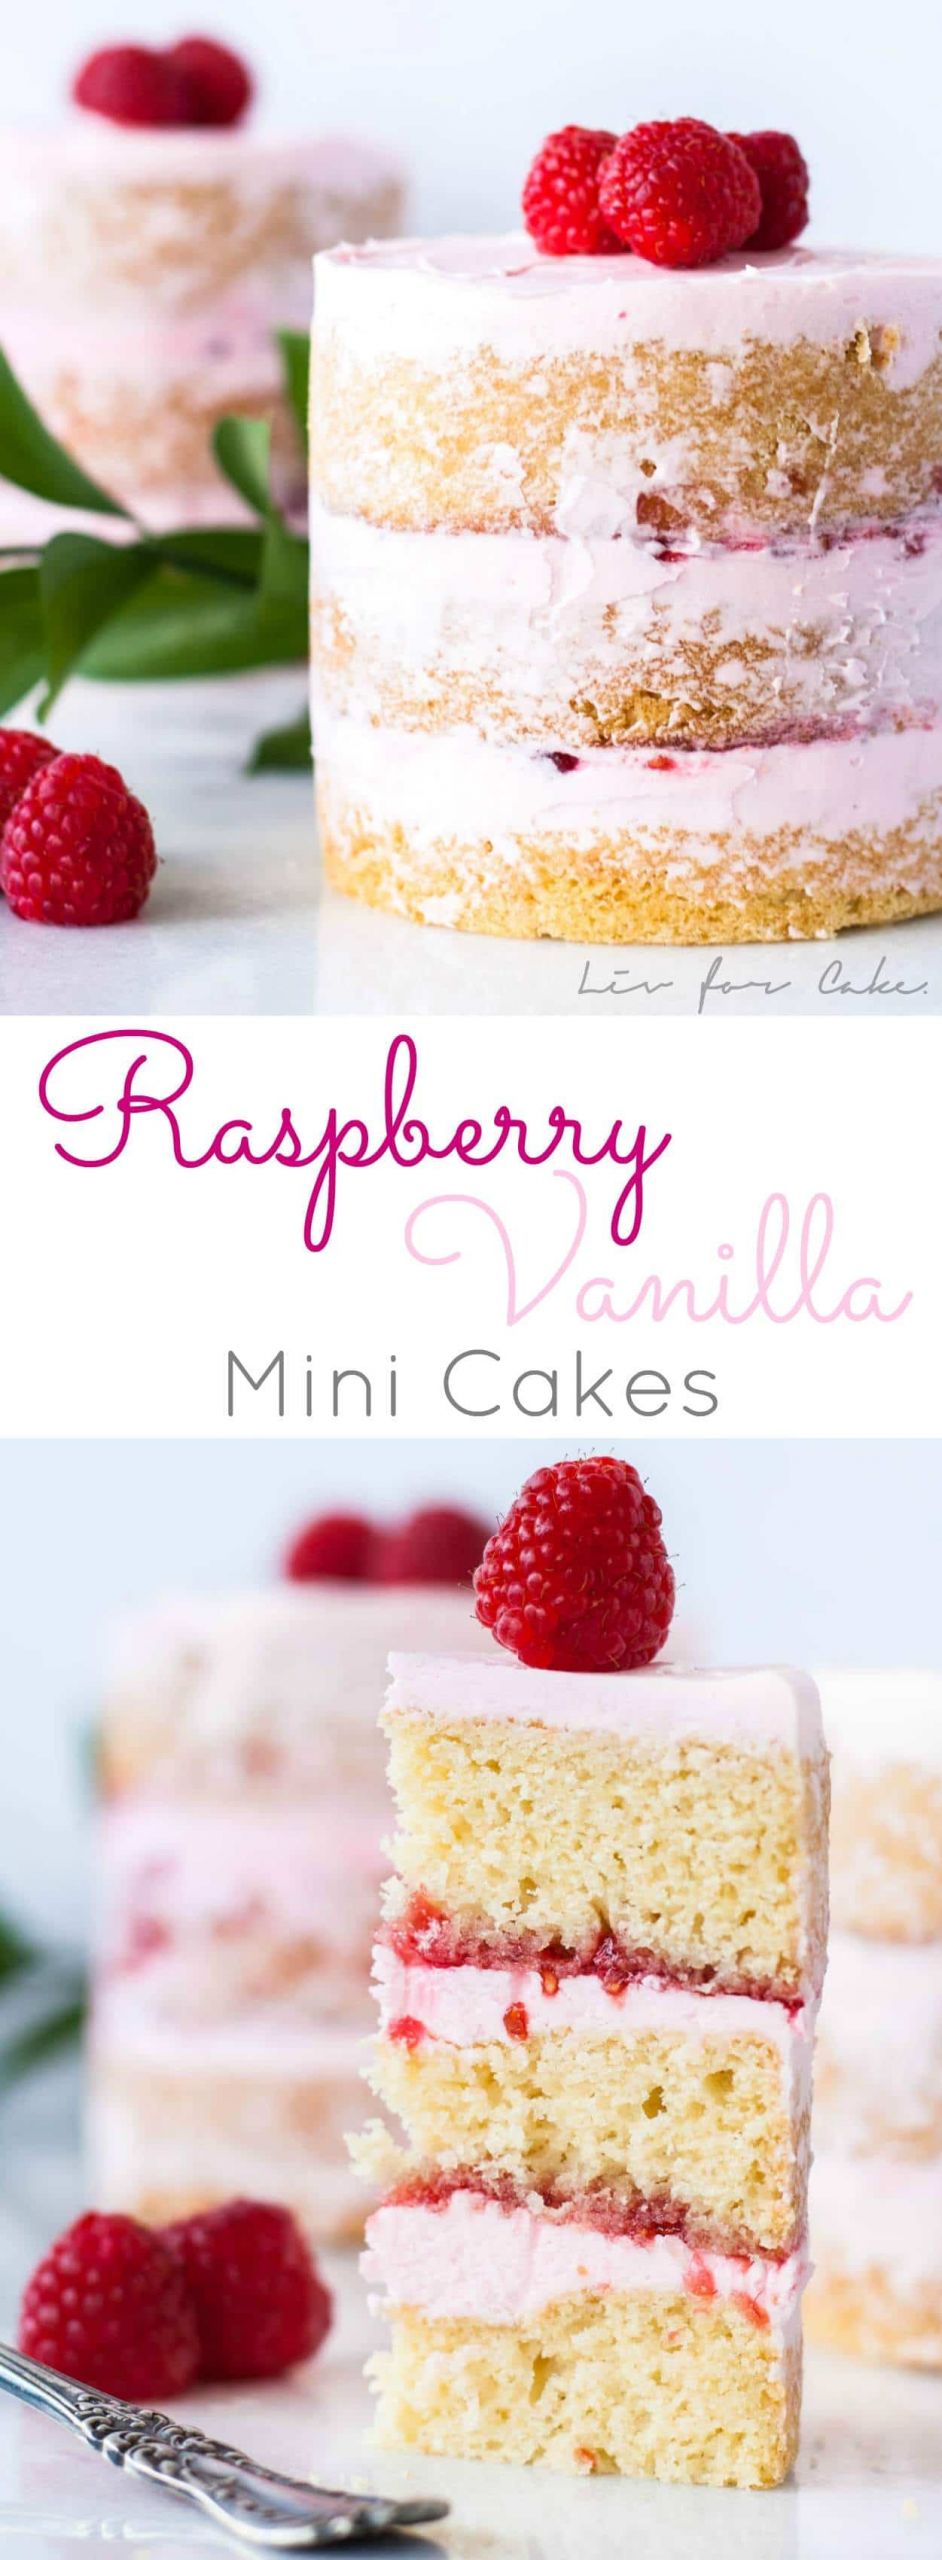 Mini Birthday Cake Recipe
 Raspberry Vanilla Mini Cakes